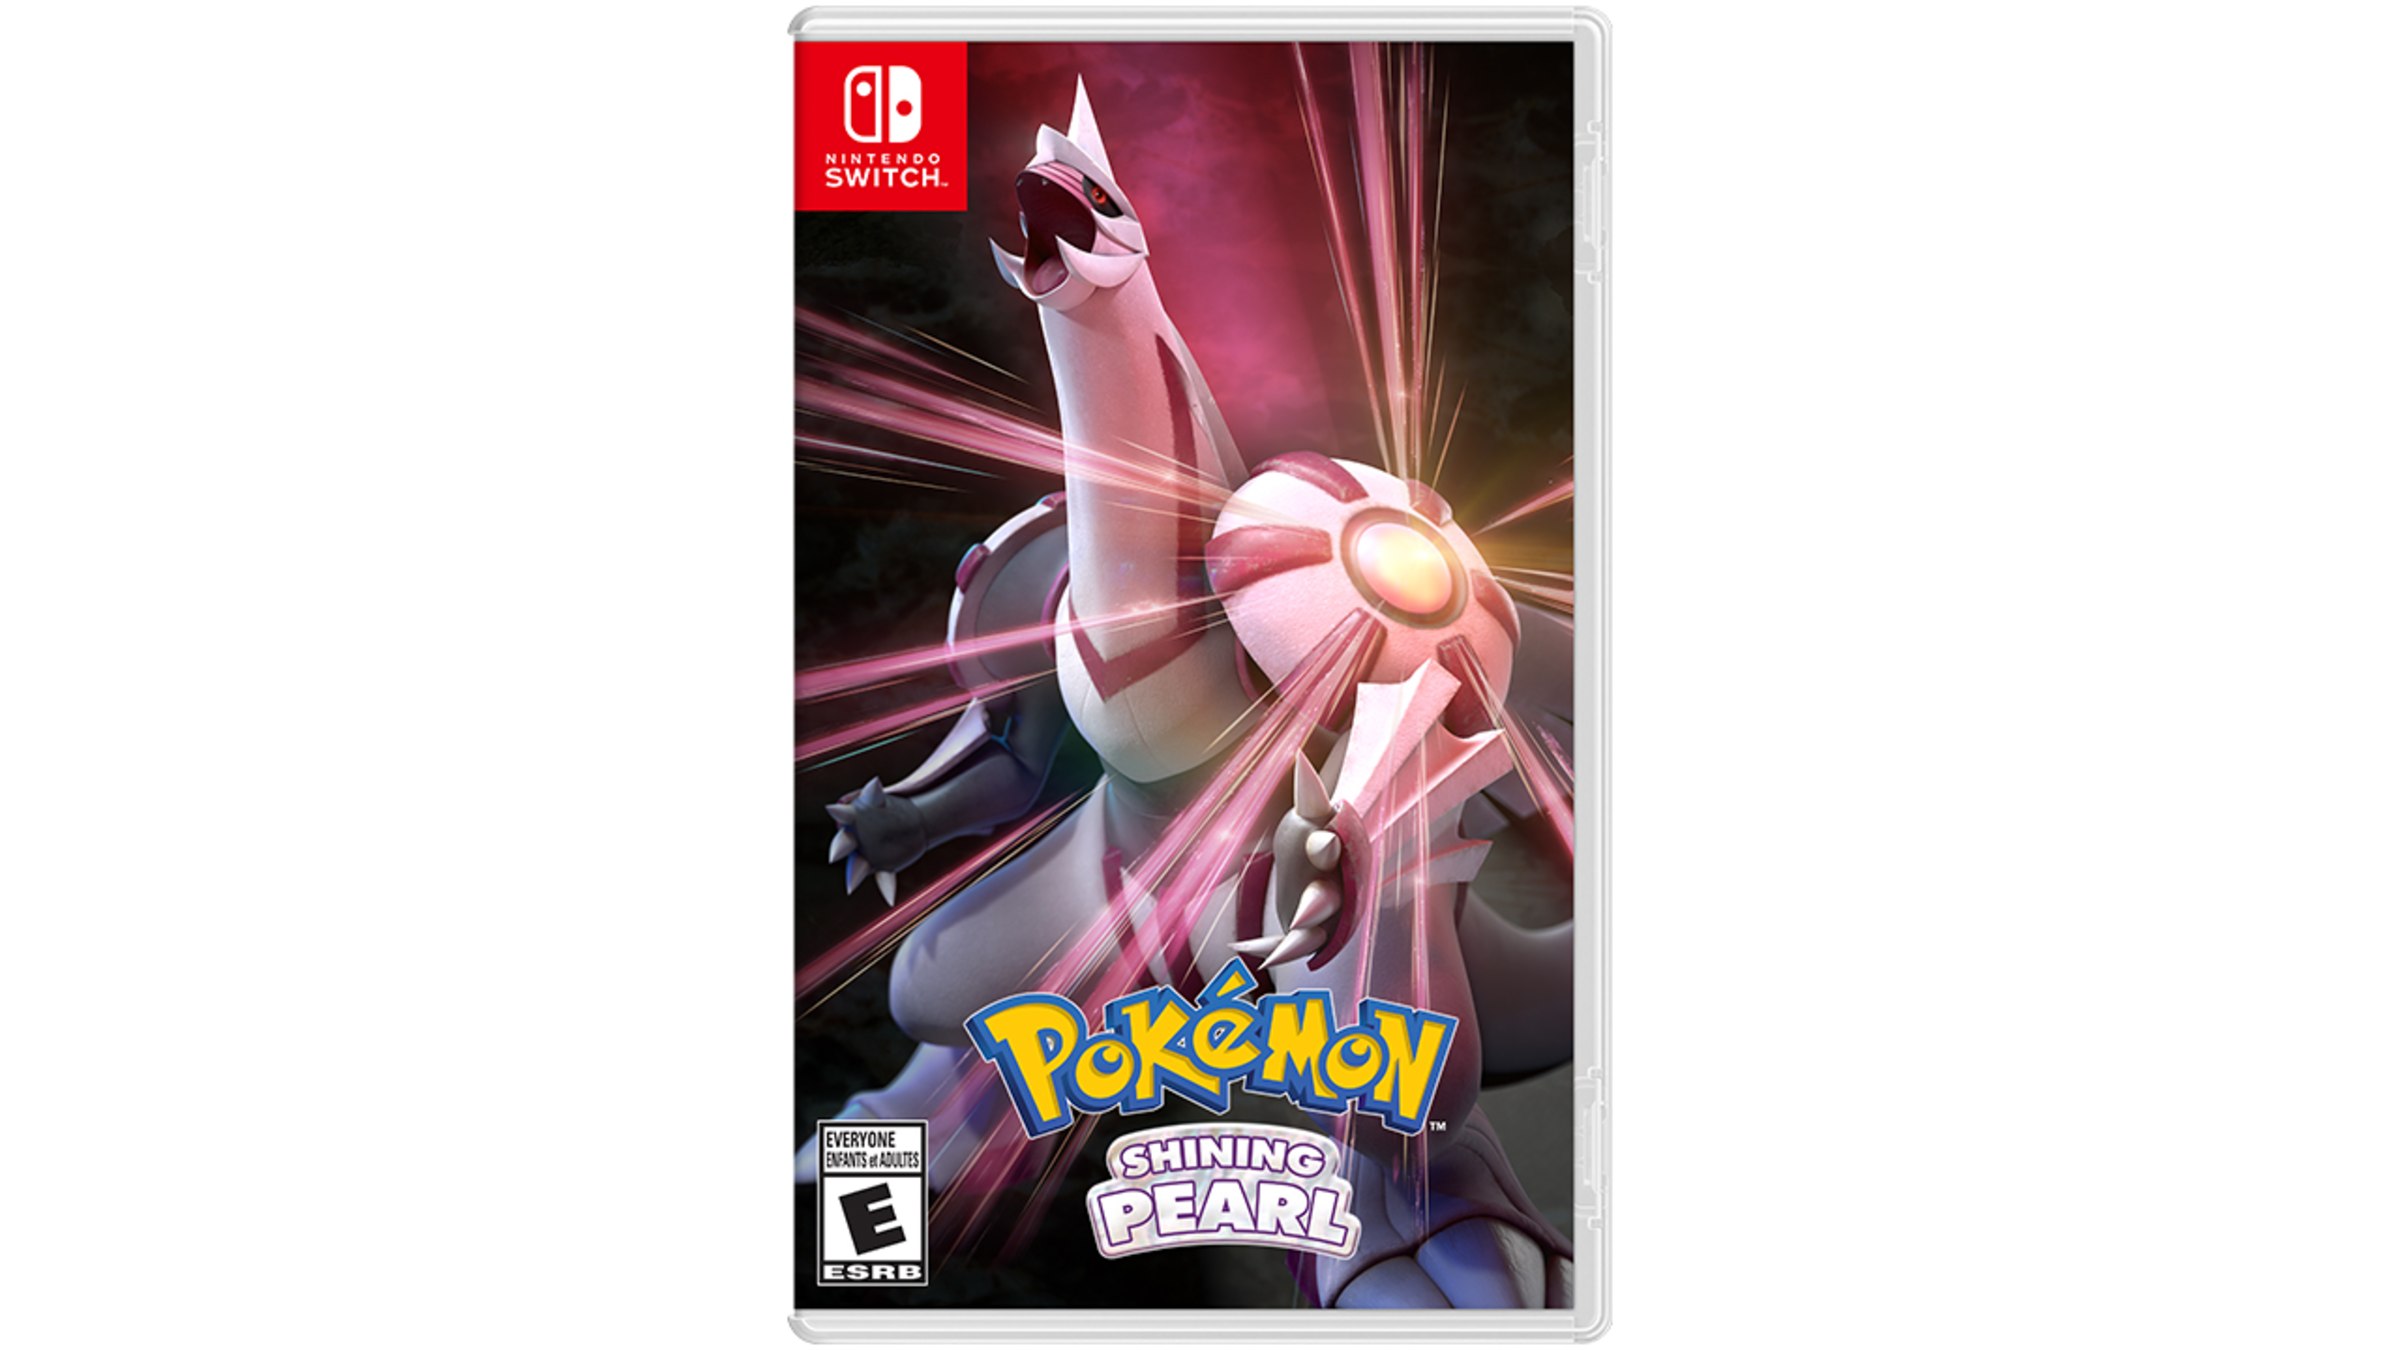 Pokémon™ Brilliant Diamond and Pokémon™ Shining Pearl